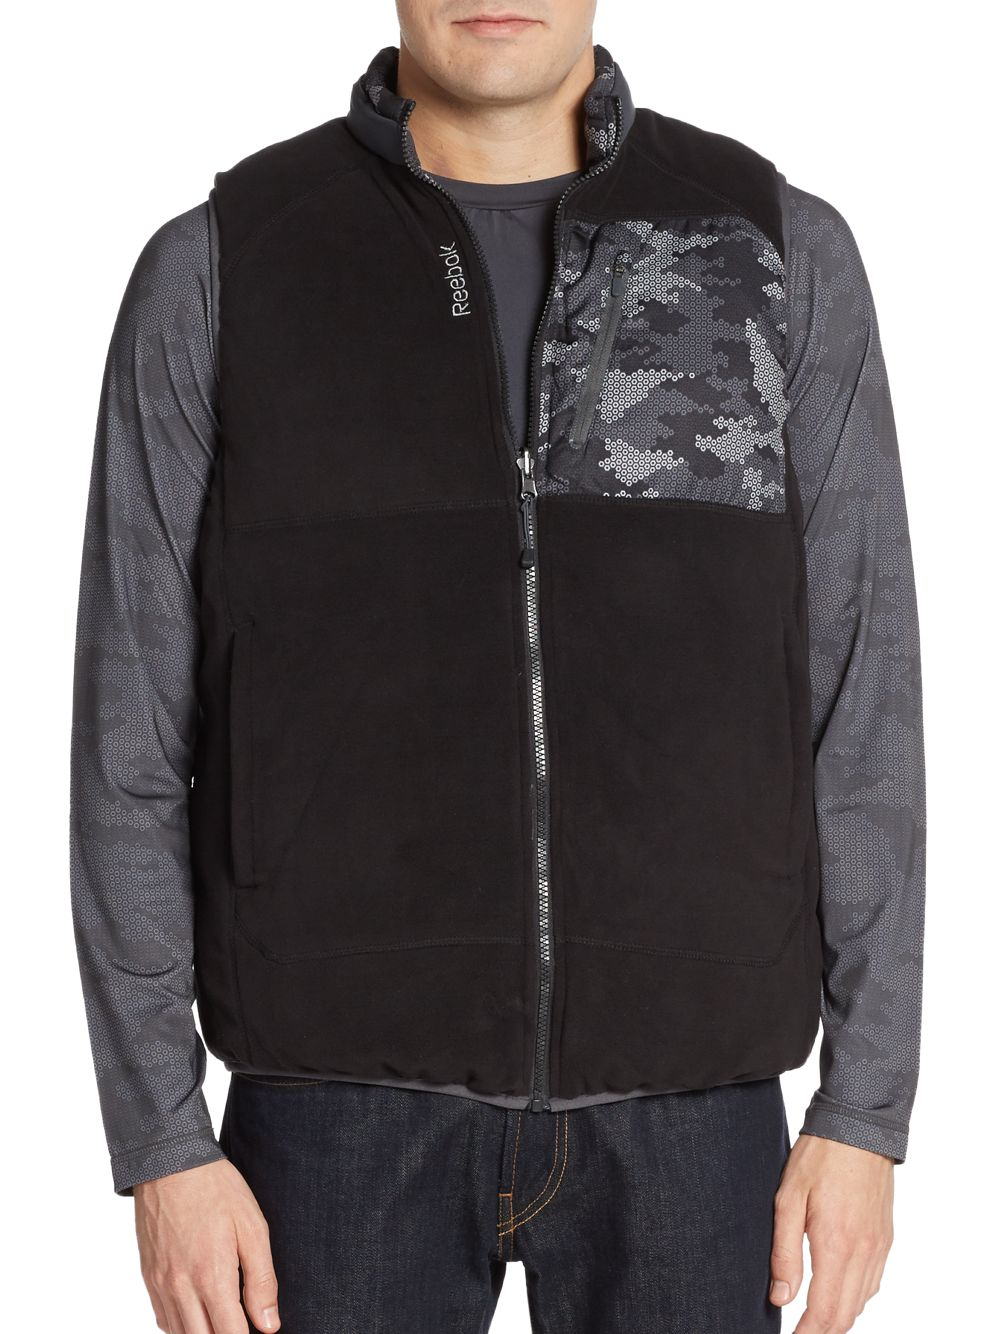 Vest in Charcoal (Gray) for Men - Lyst